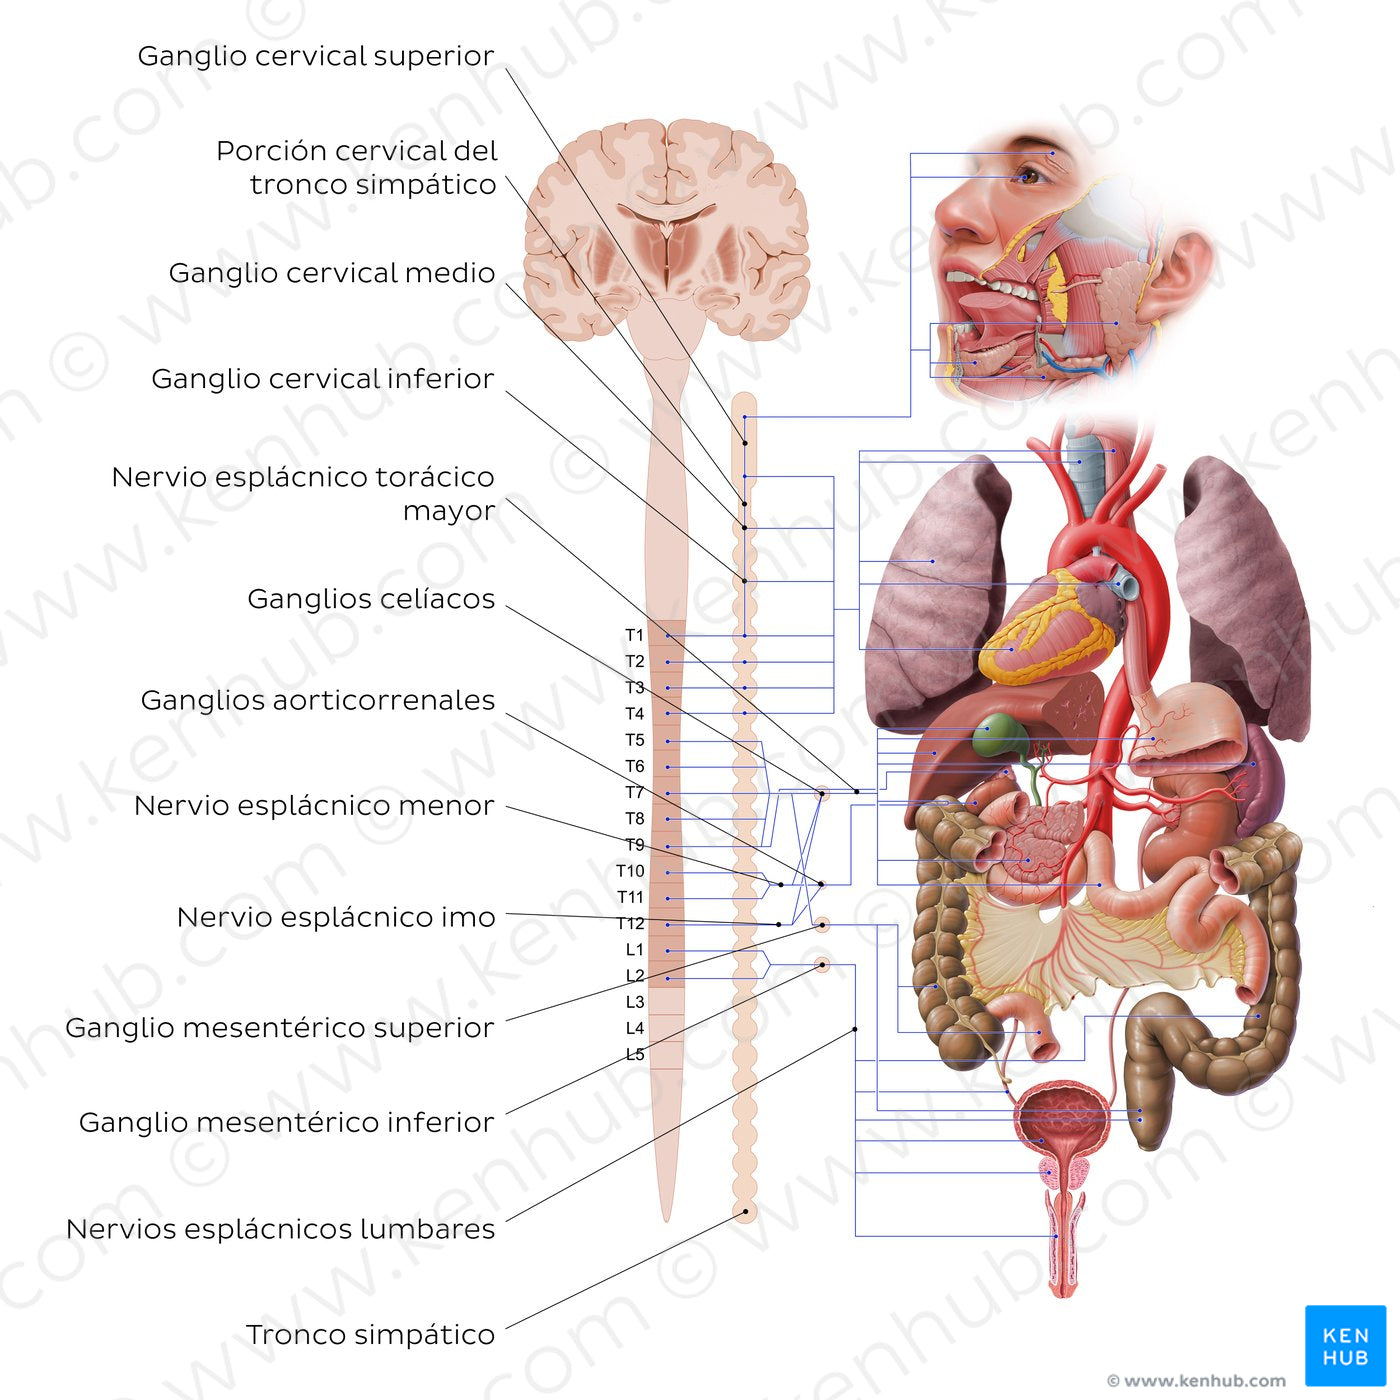 Autonomic nervous system - sympathetic nervous system (Spanish)